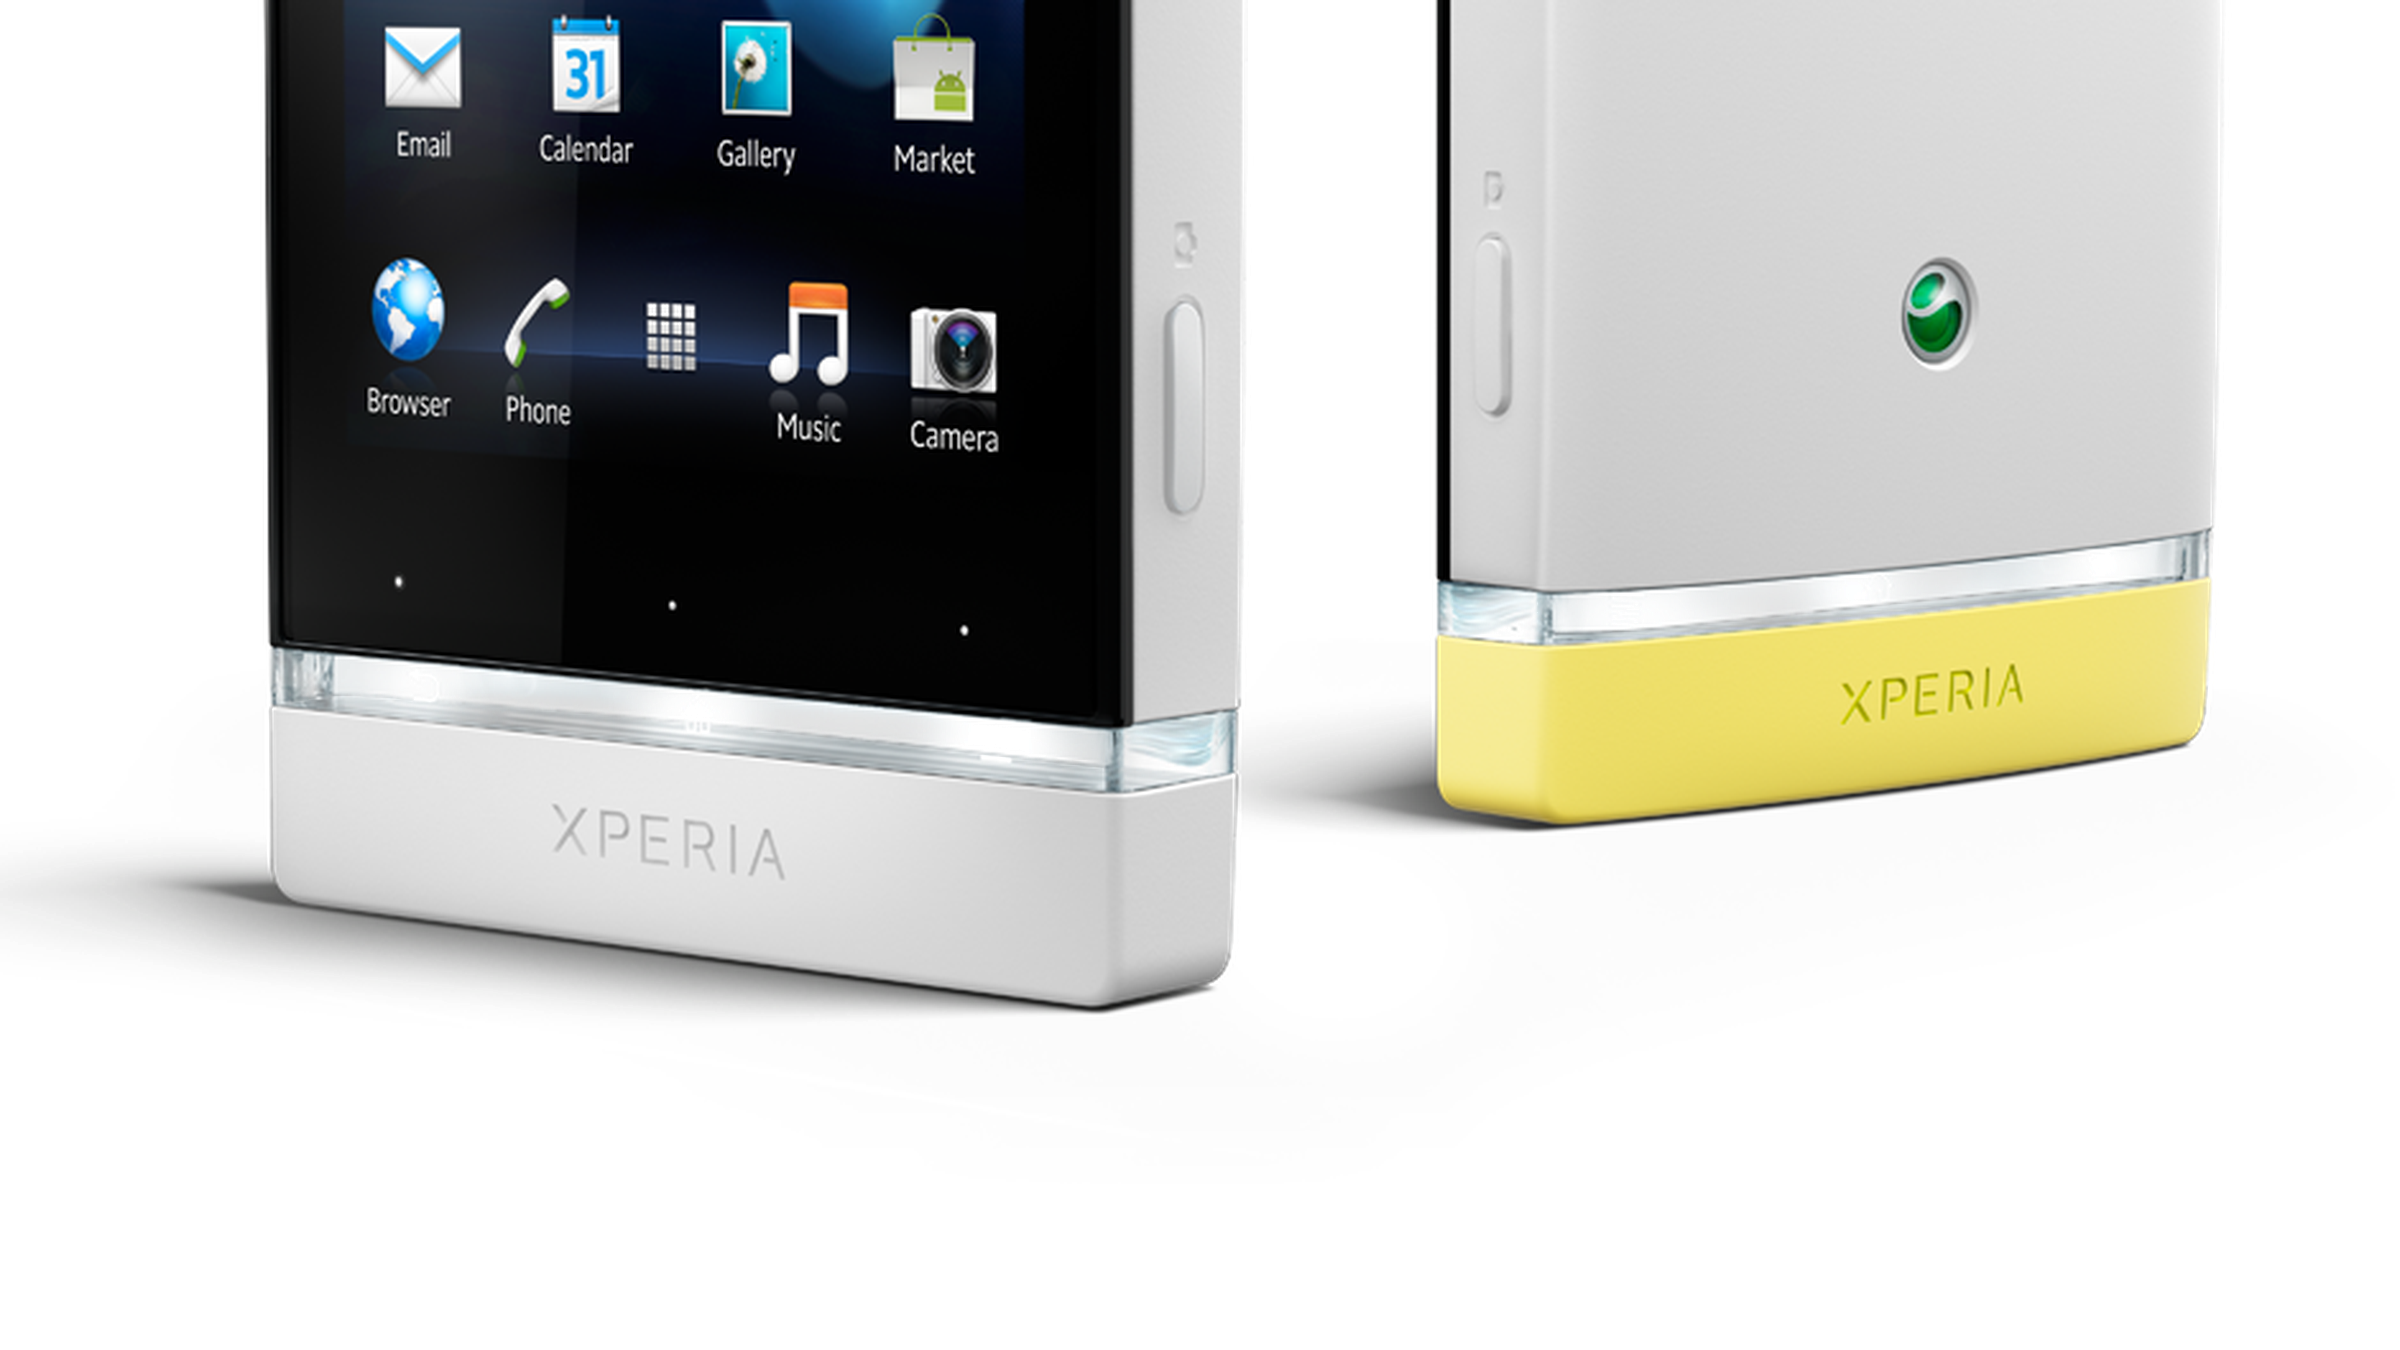 Sony Xperia U announcement photos